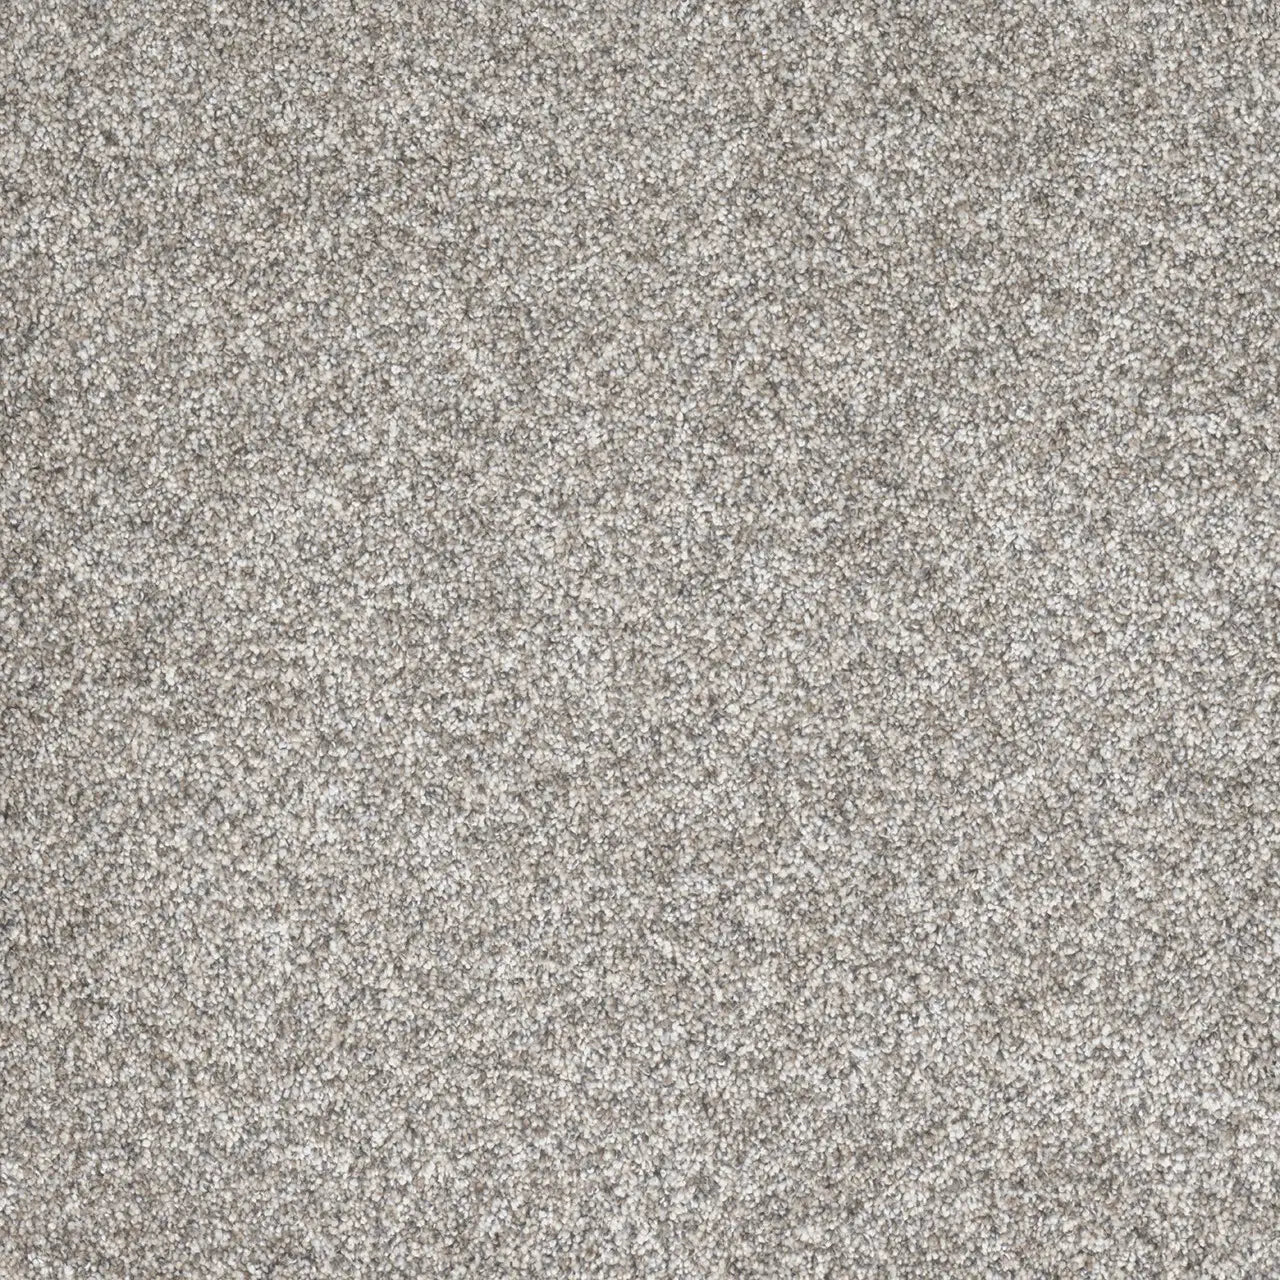 Glitter, Gold Standard I, Carpet by Dreamweaver, Calhoun's Flooring Springfield, IL